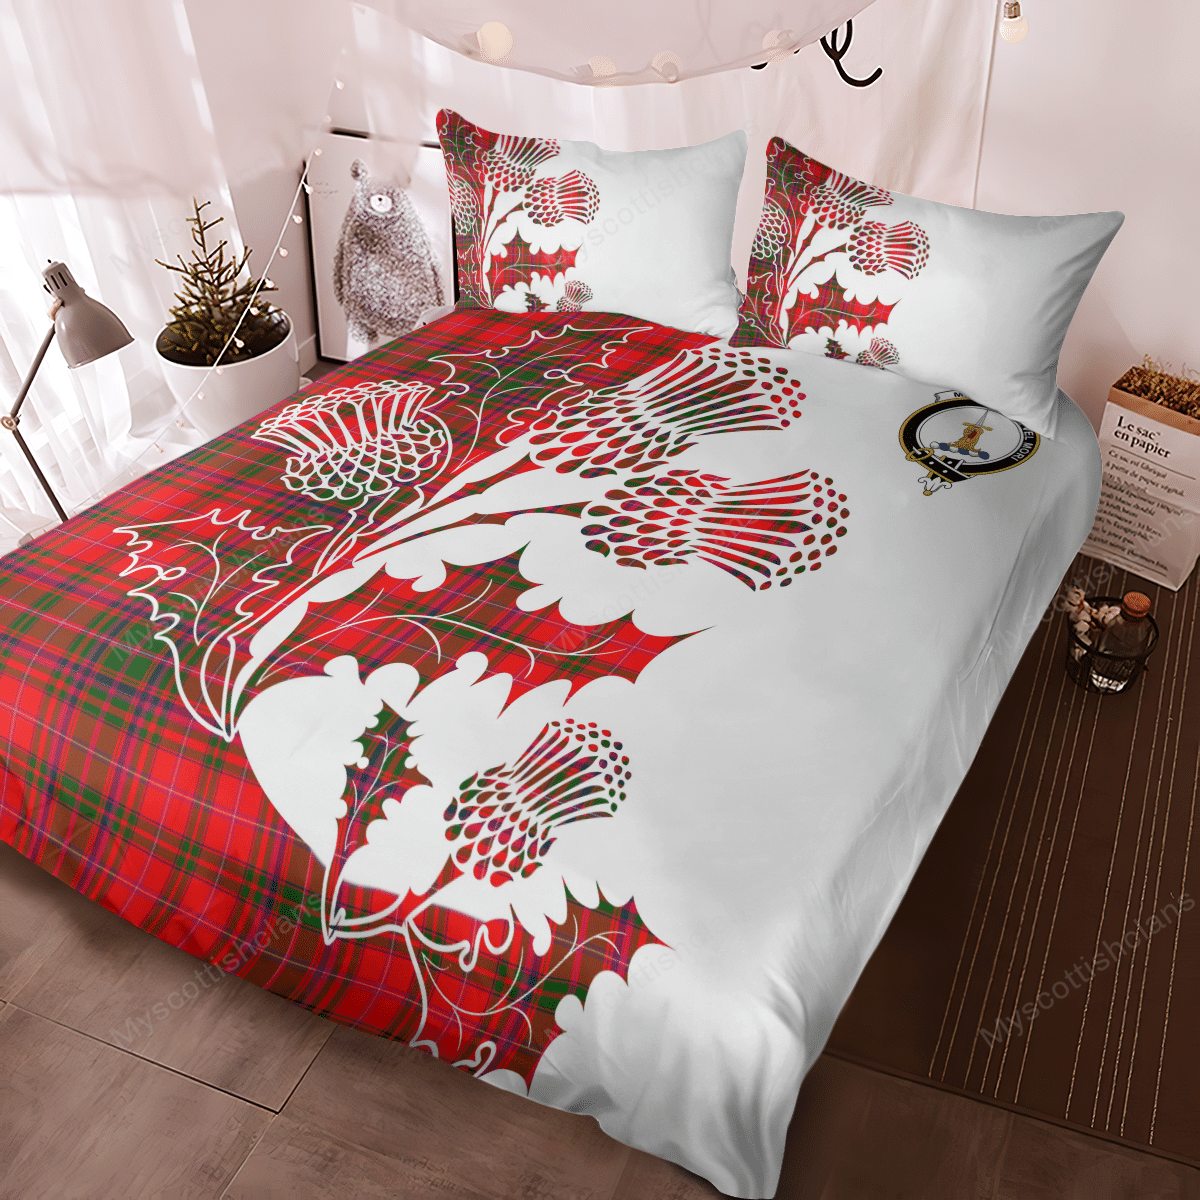 MacDowall Of Garthland Tartan Crest Bedding Set - Thistle Style